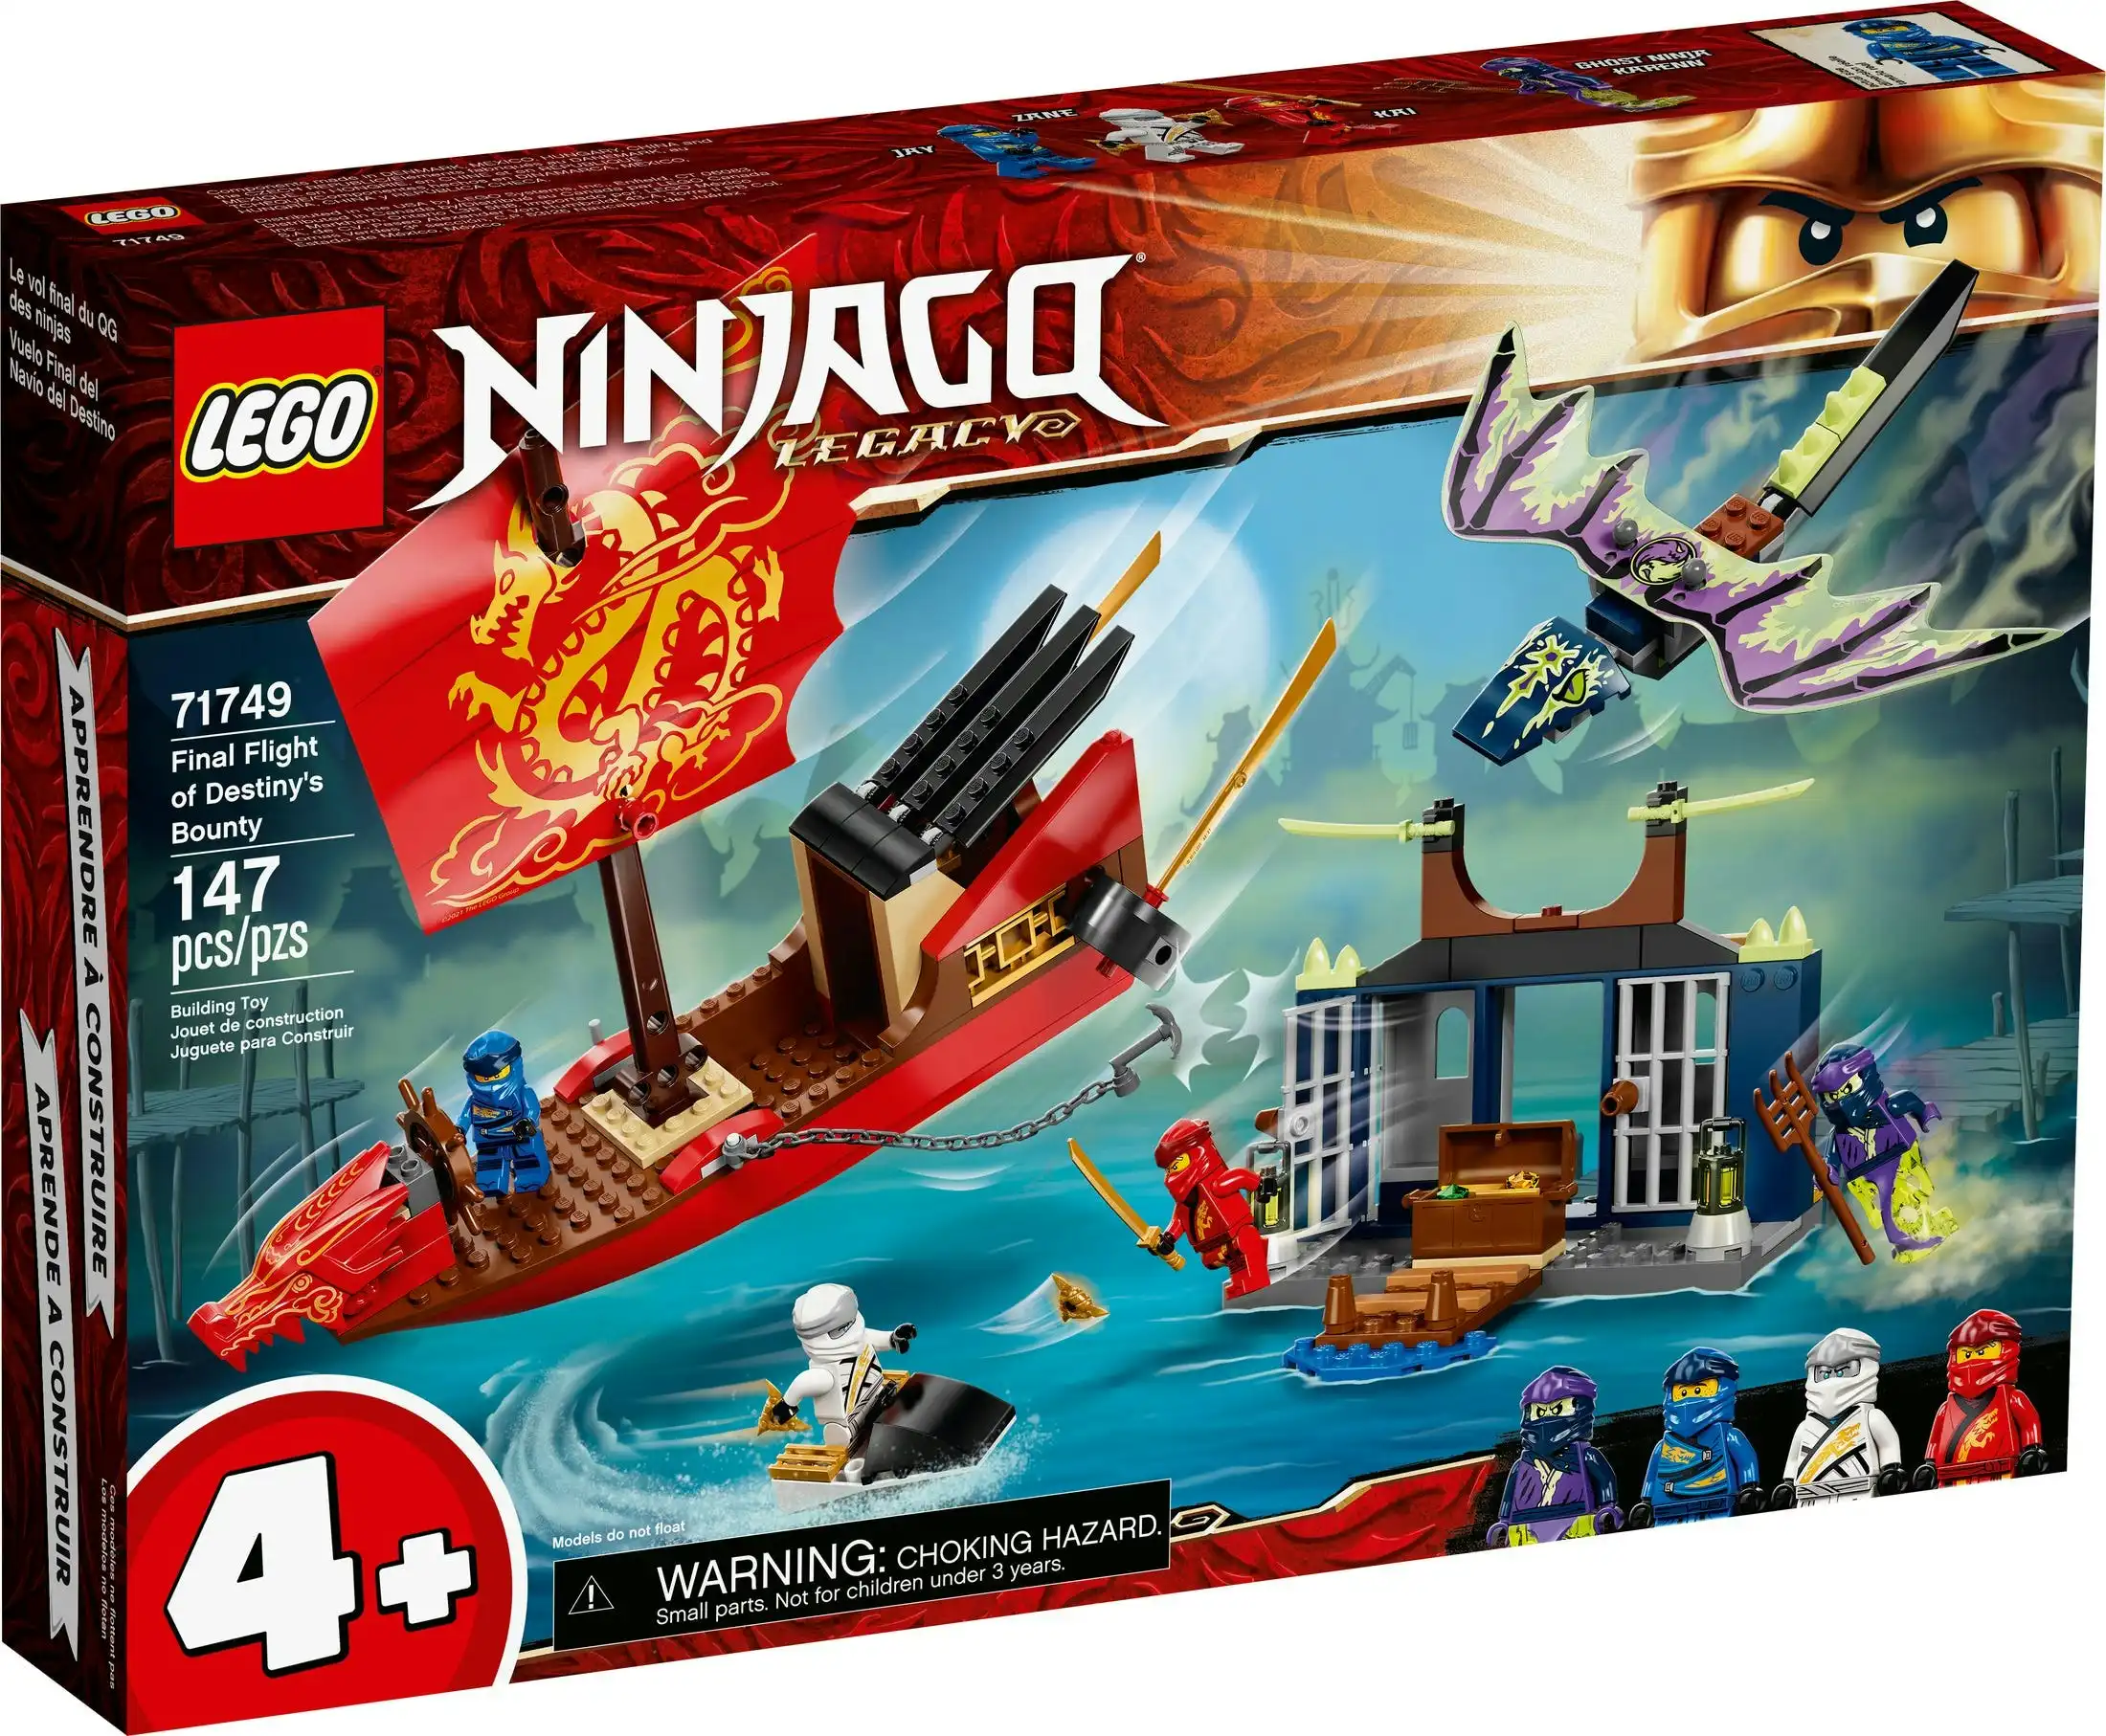 LEGO 71749 Final Flight of Destiny's Bounty - Ninjago 4+